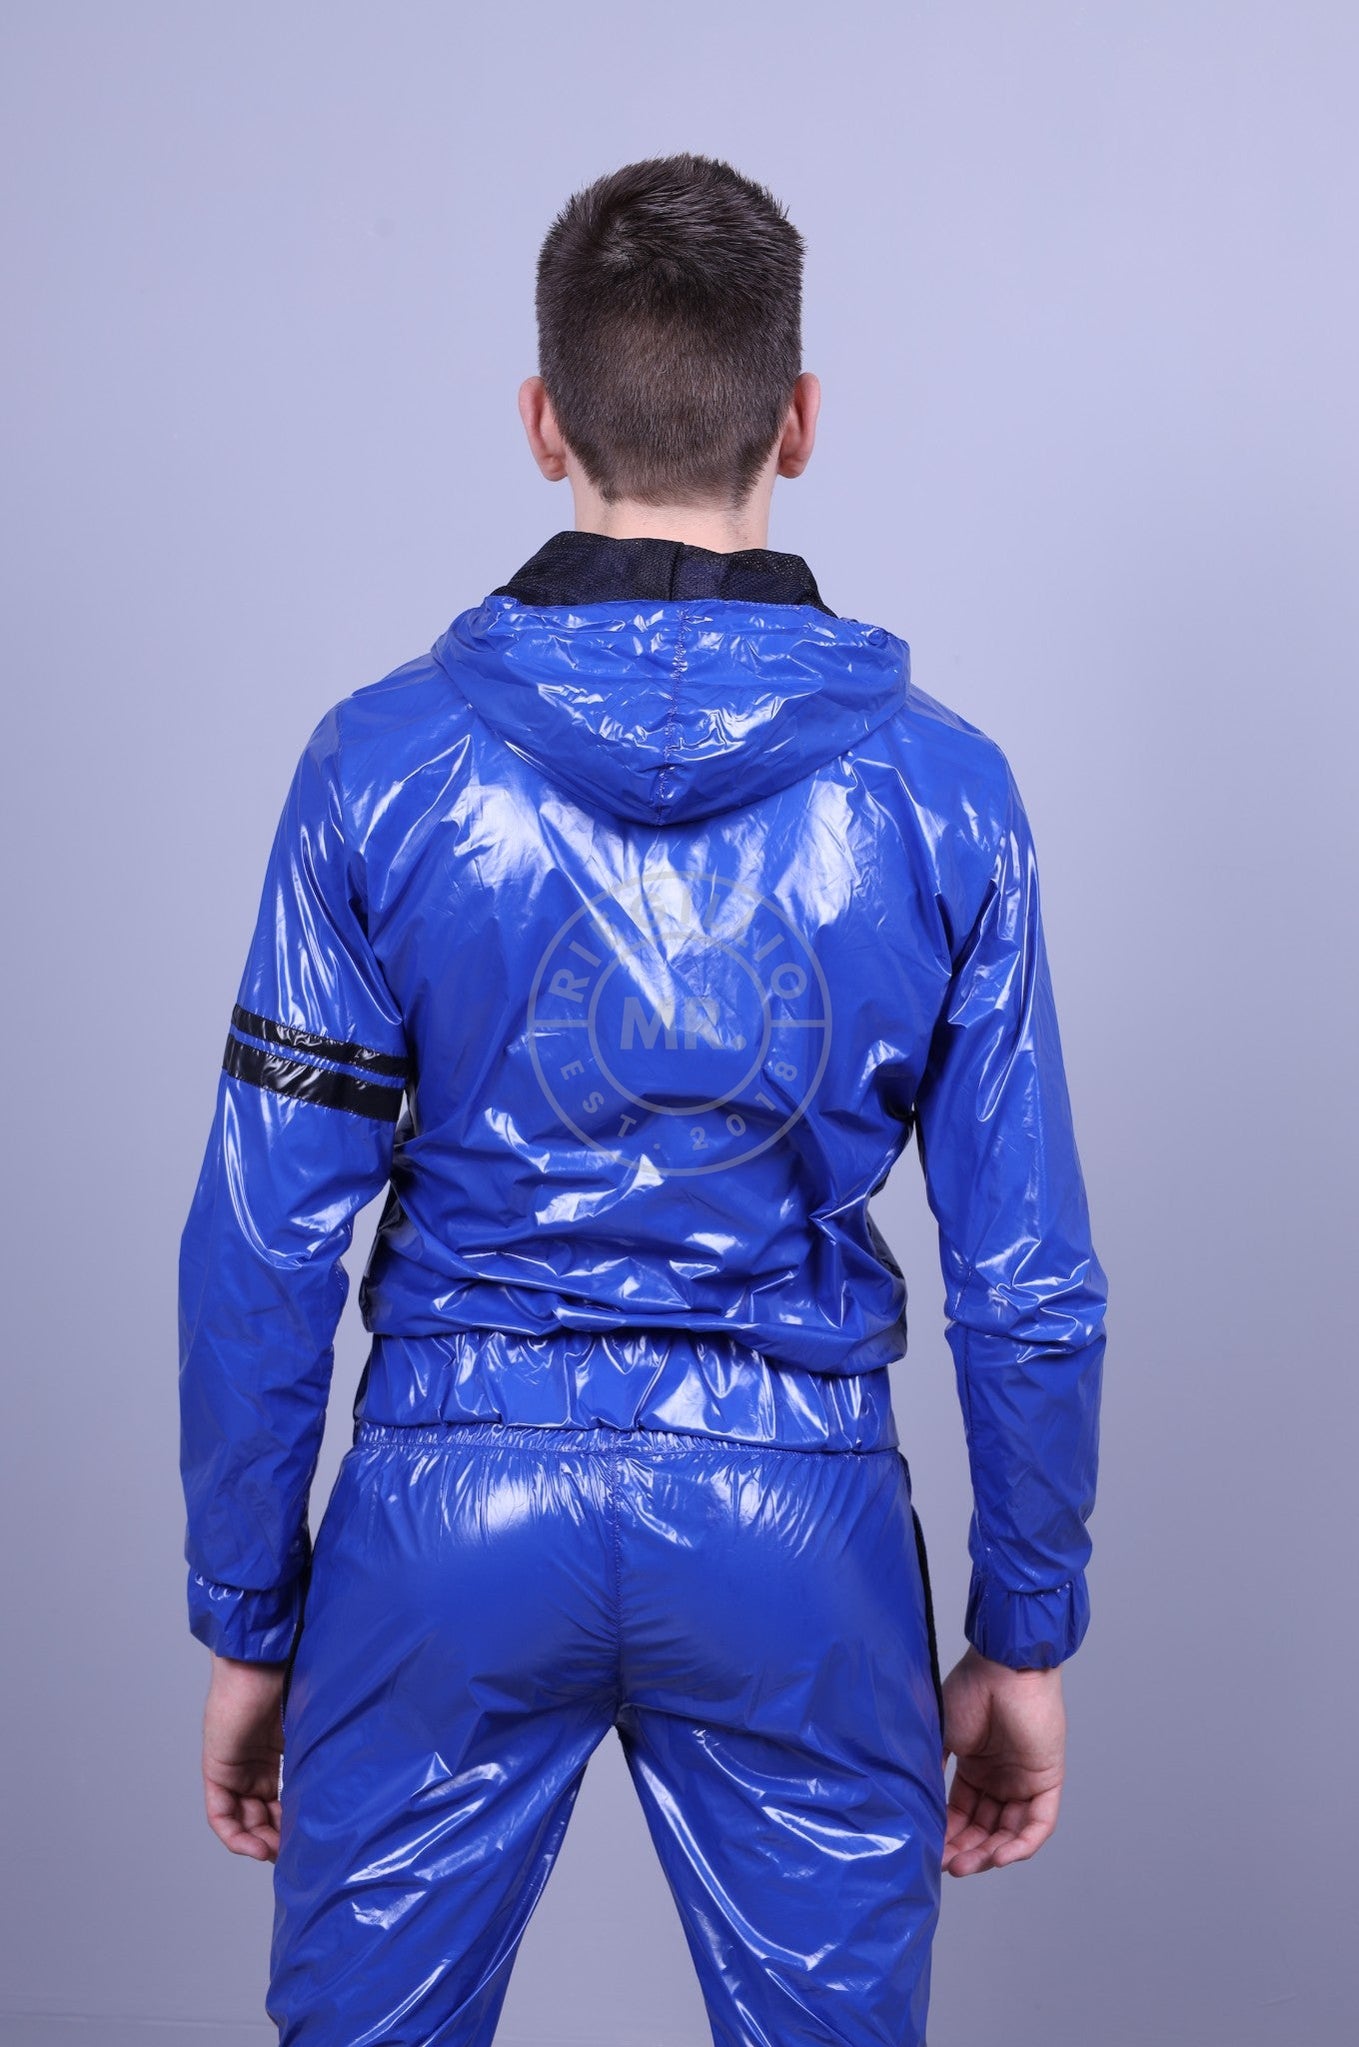 Shiny Nylon Tracksuit Jacket - Blue-at MR. Riegillio